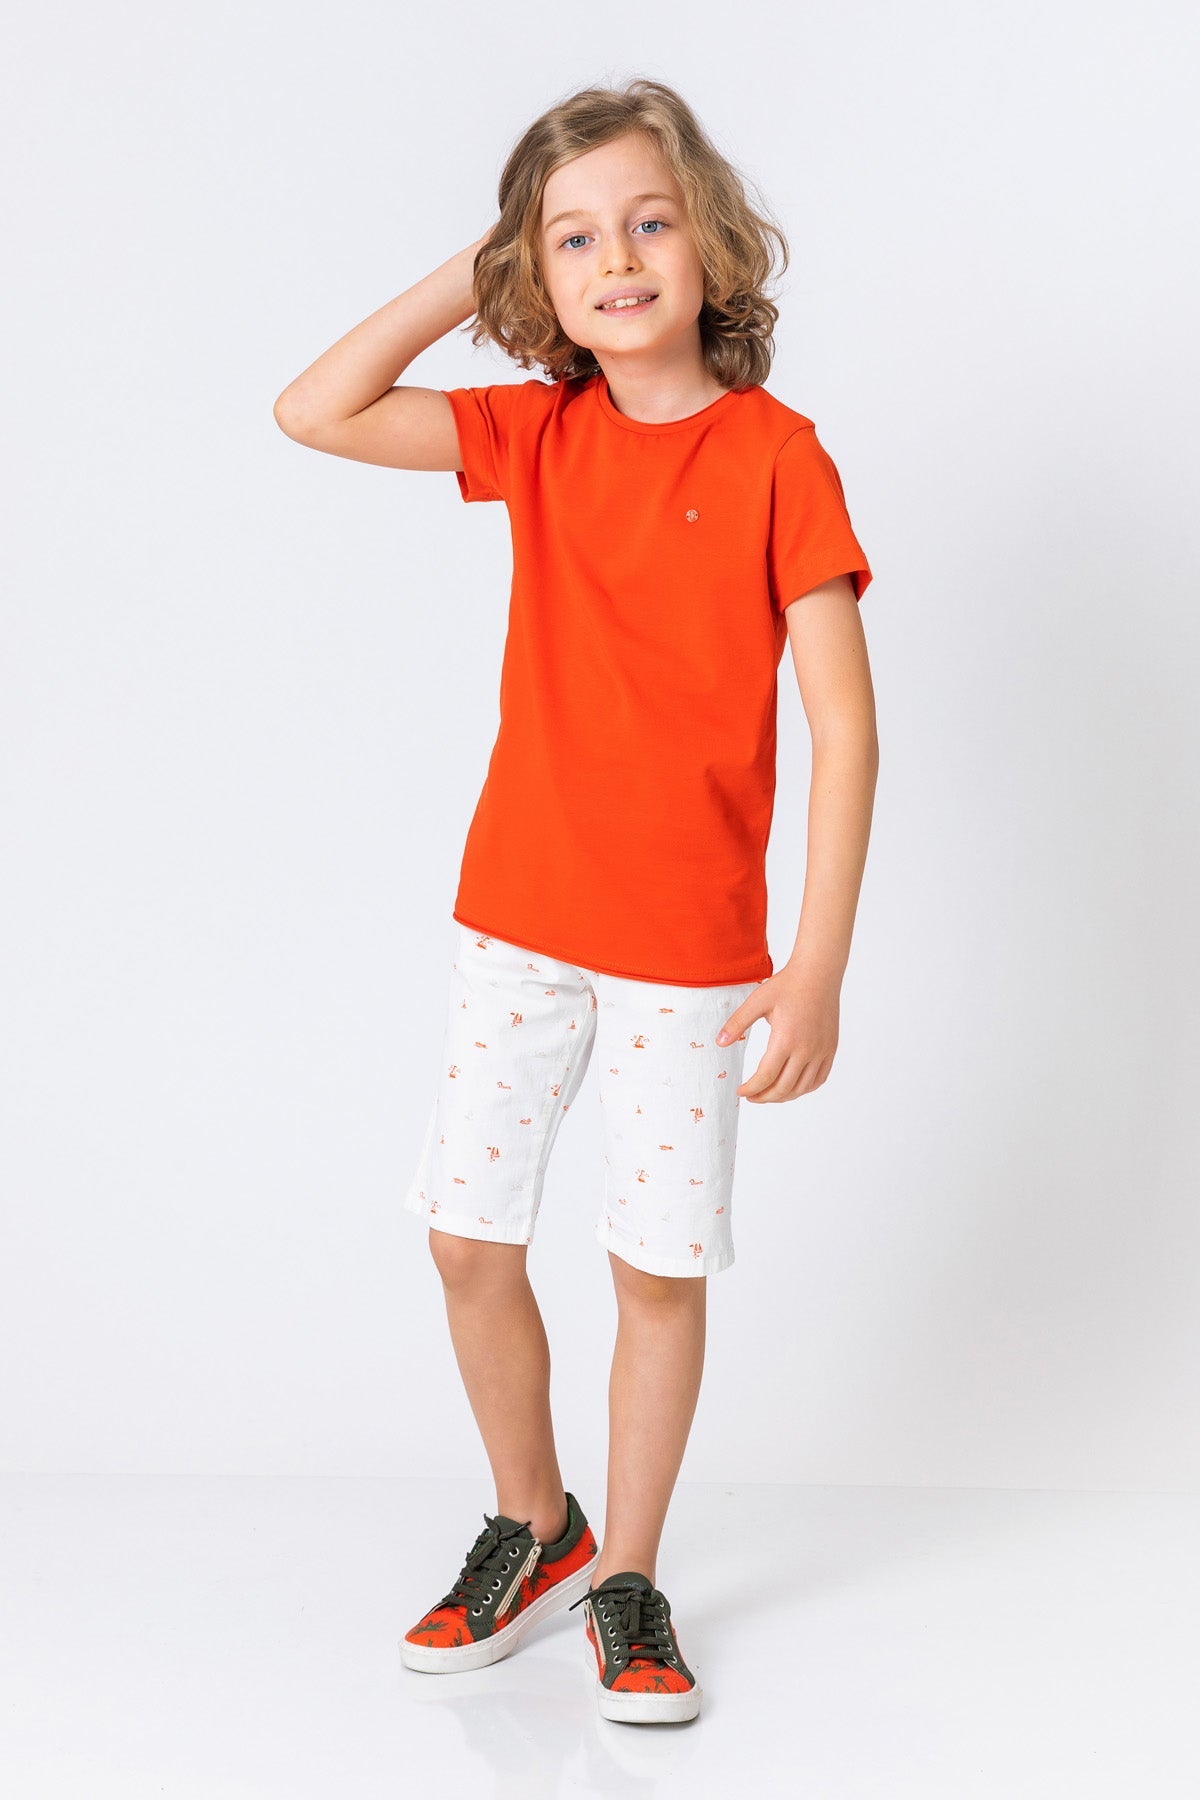 InCity Kids Boys Plain Solid Sleeve Neck T-Shirt Round Basic Short